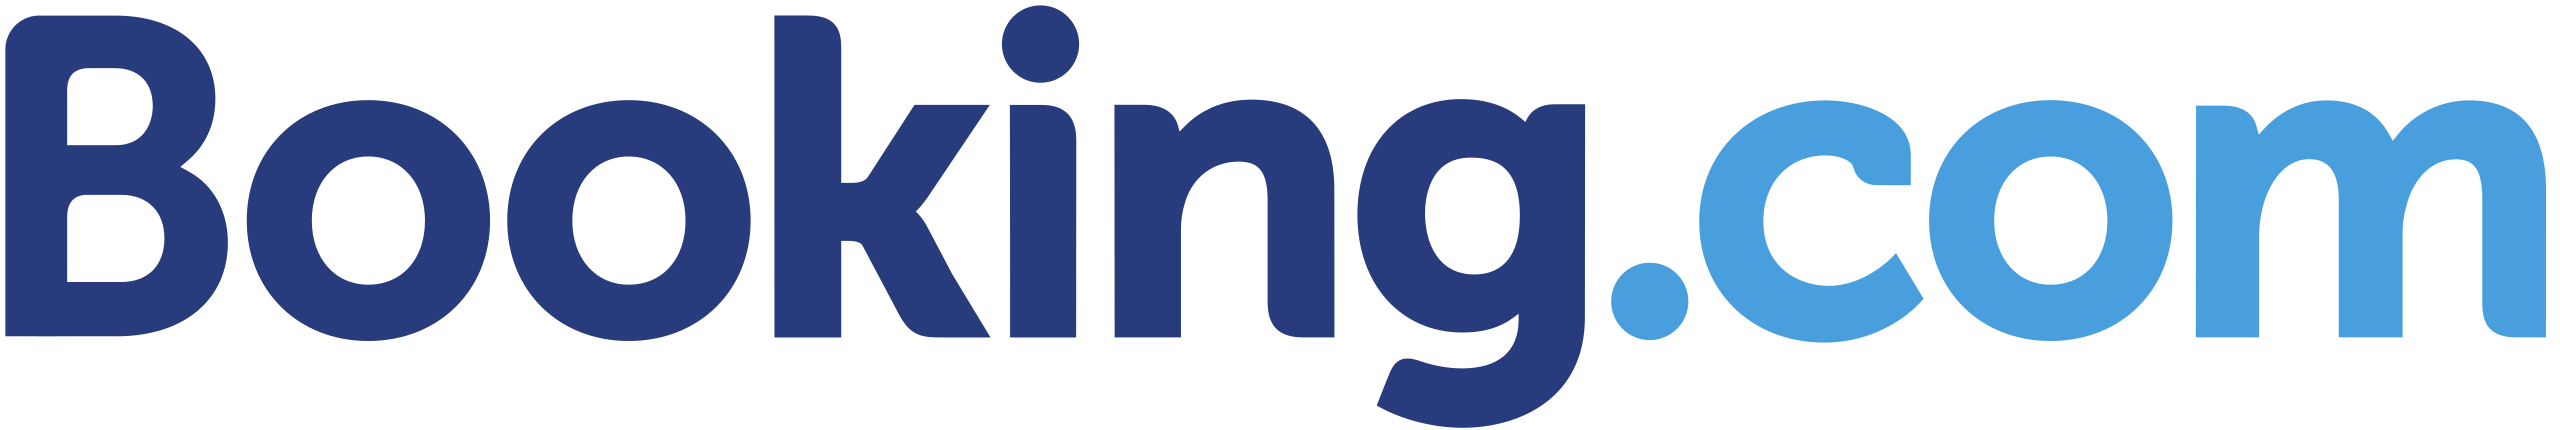 File:Booking.com logo.svg - Wikipedia